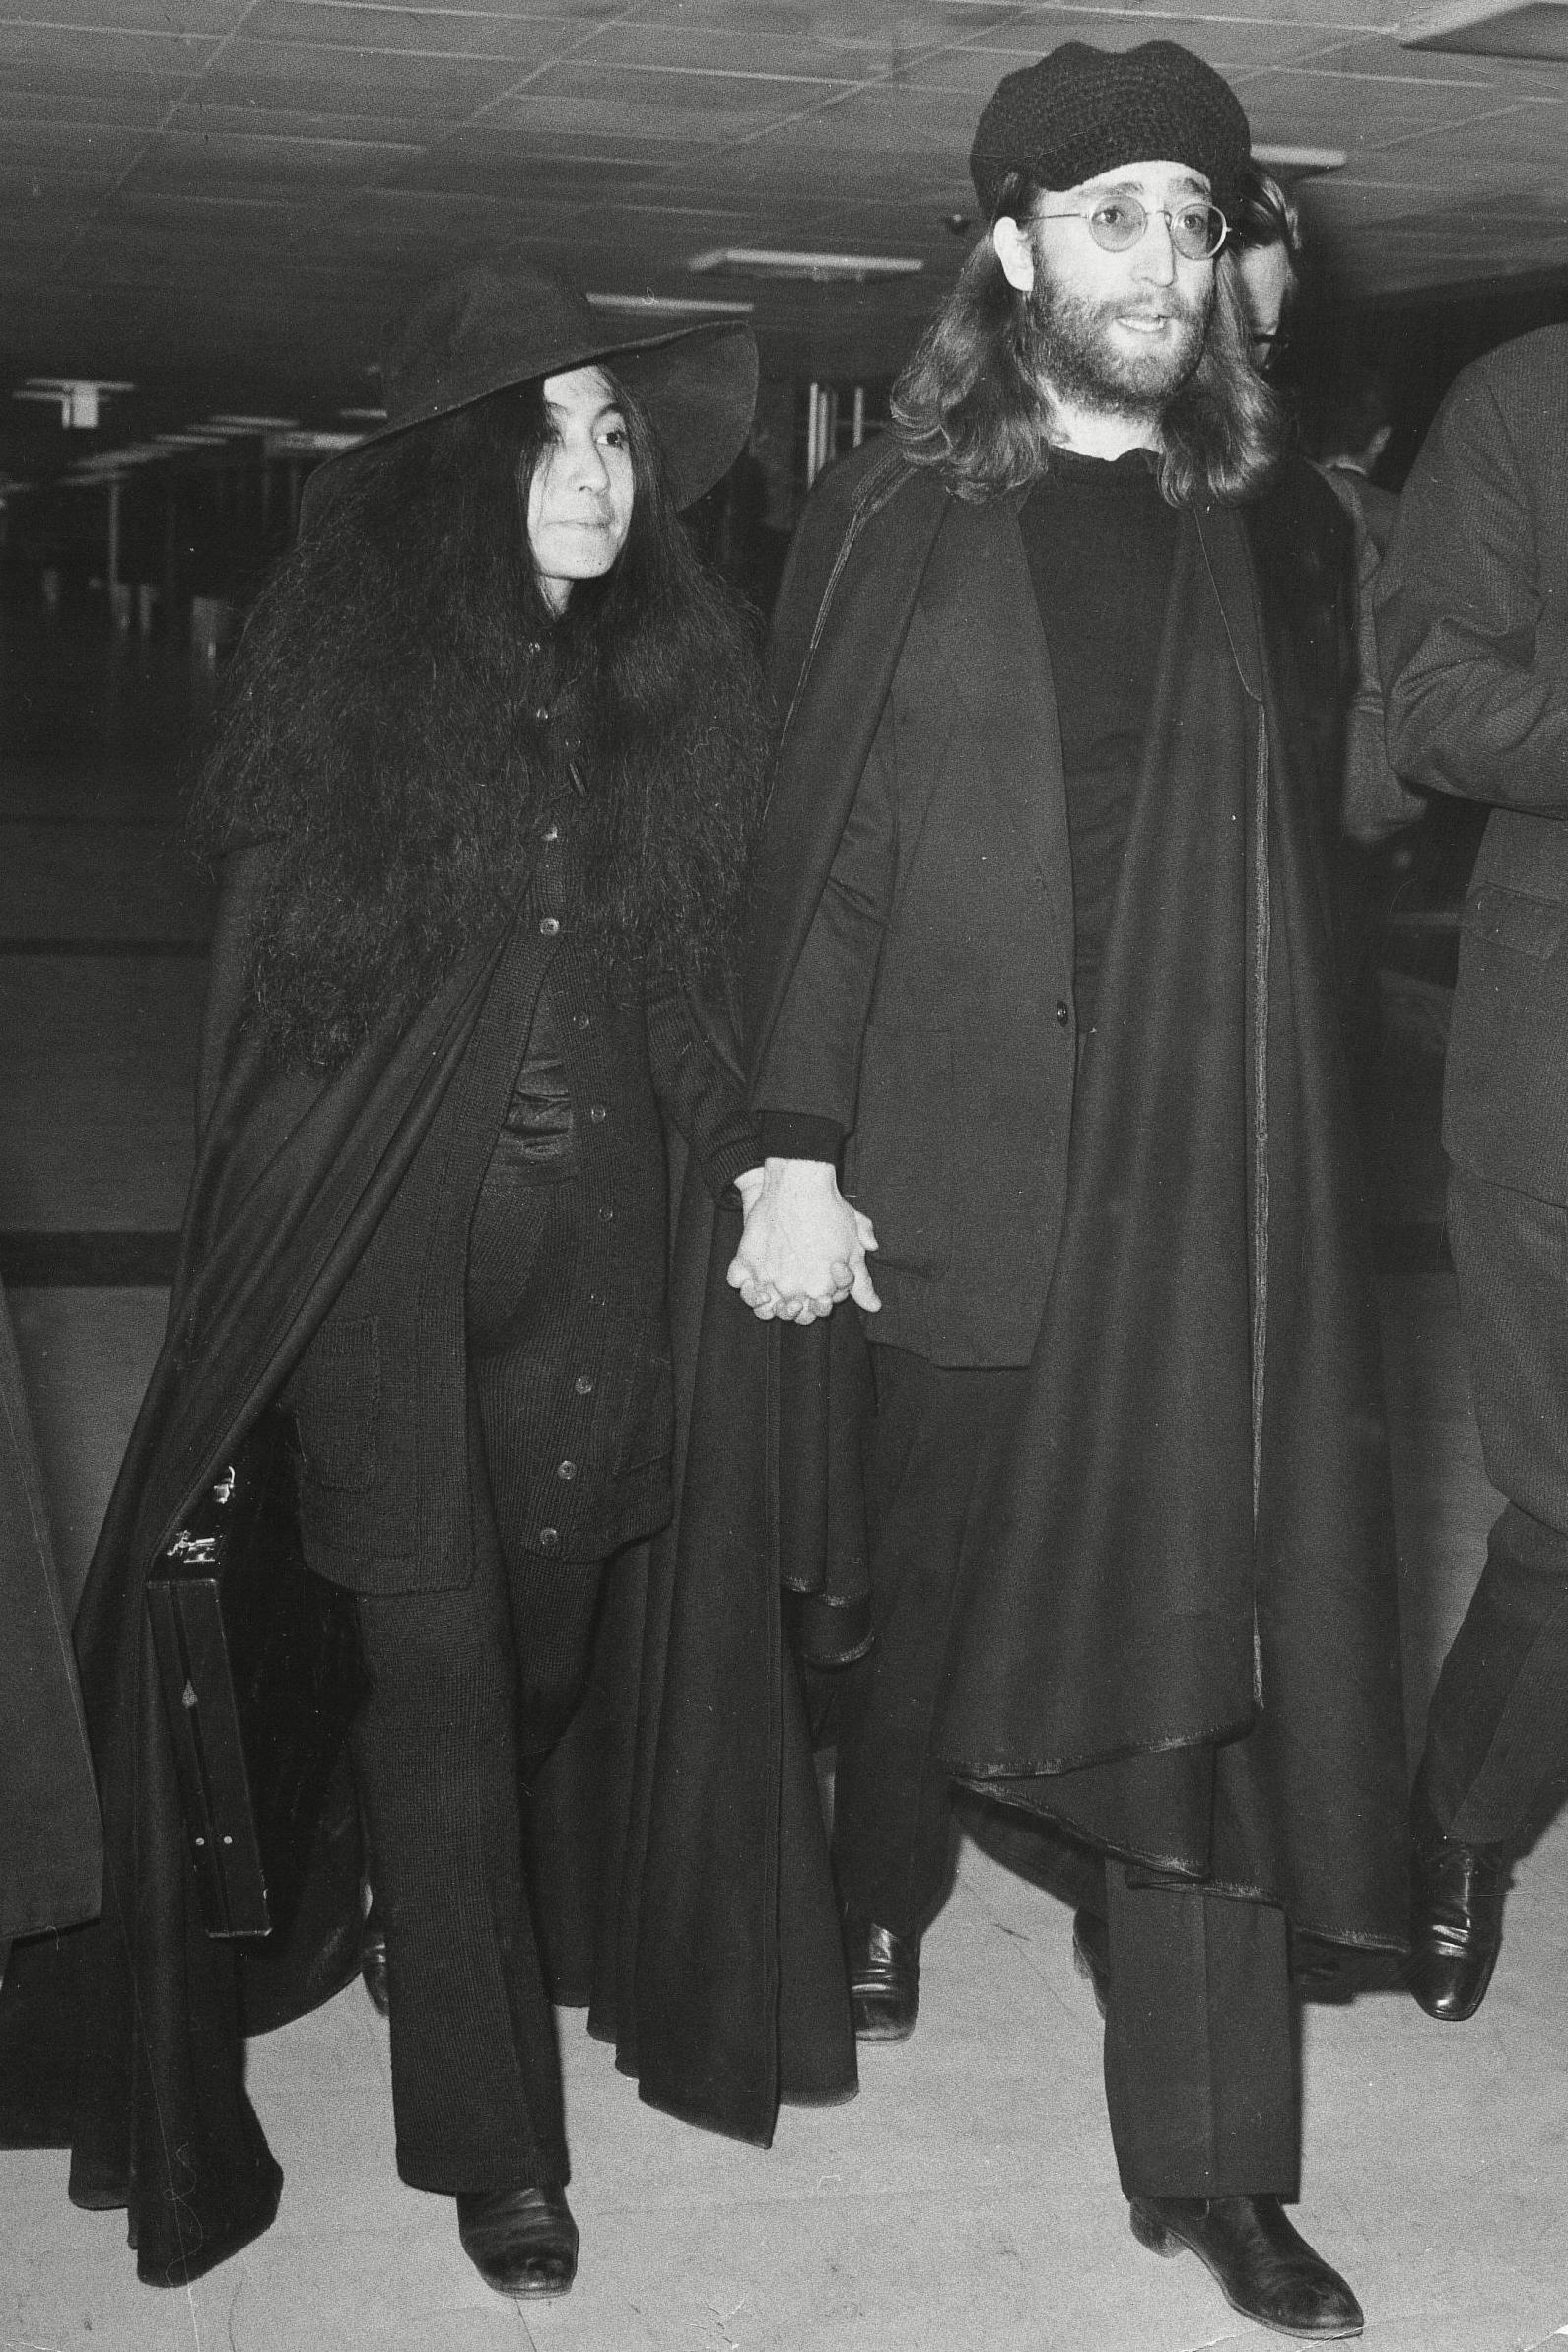 Yoko Ono and John Lennon at London Airport in 1969